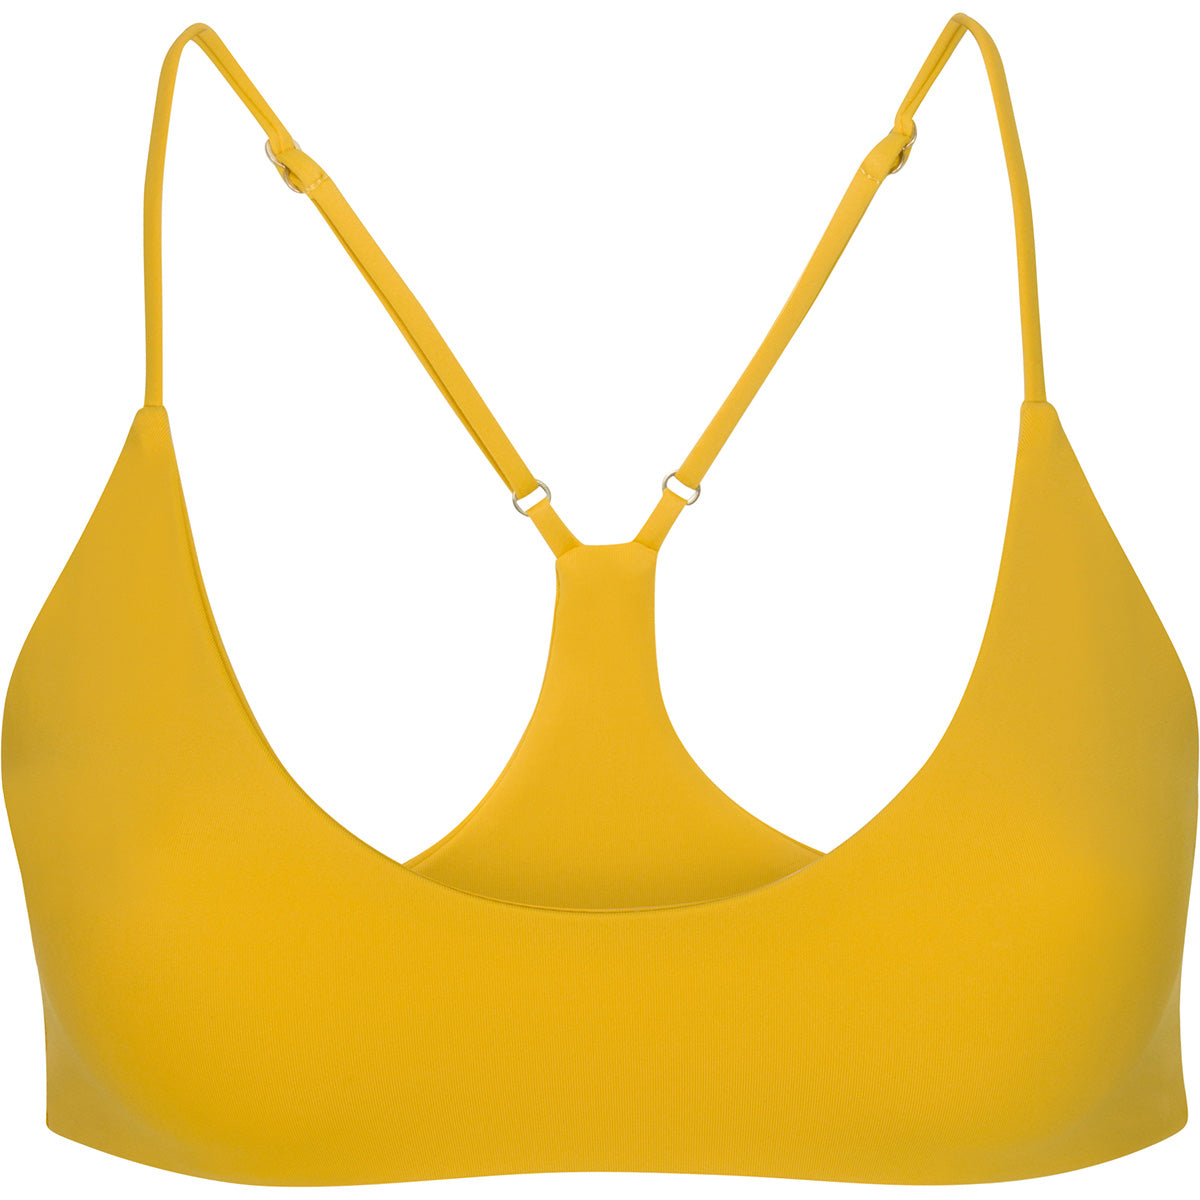 Wylder: The Scoop Neck Bikini Top